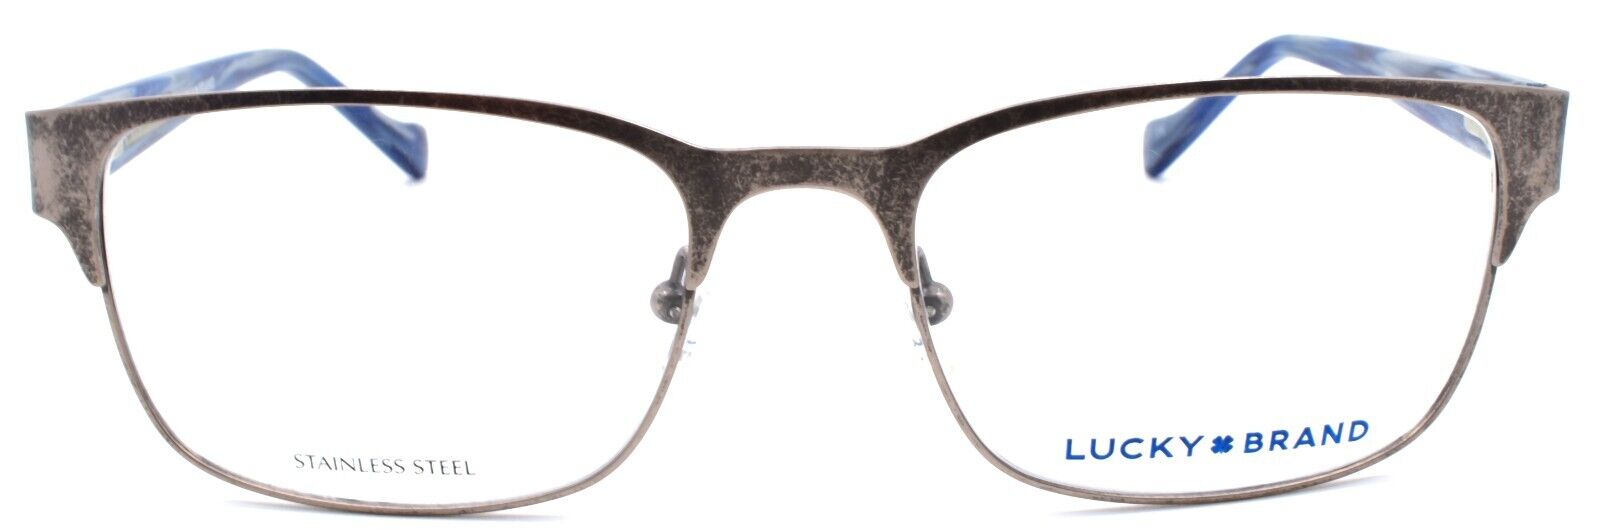 2-LUCKY BRAND D301 Men's Eyeglasses Frames 53-18-140 Distressed Gunmetal-751286281859-IKSpecs